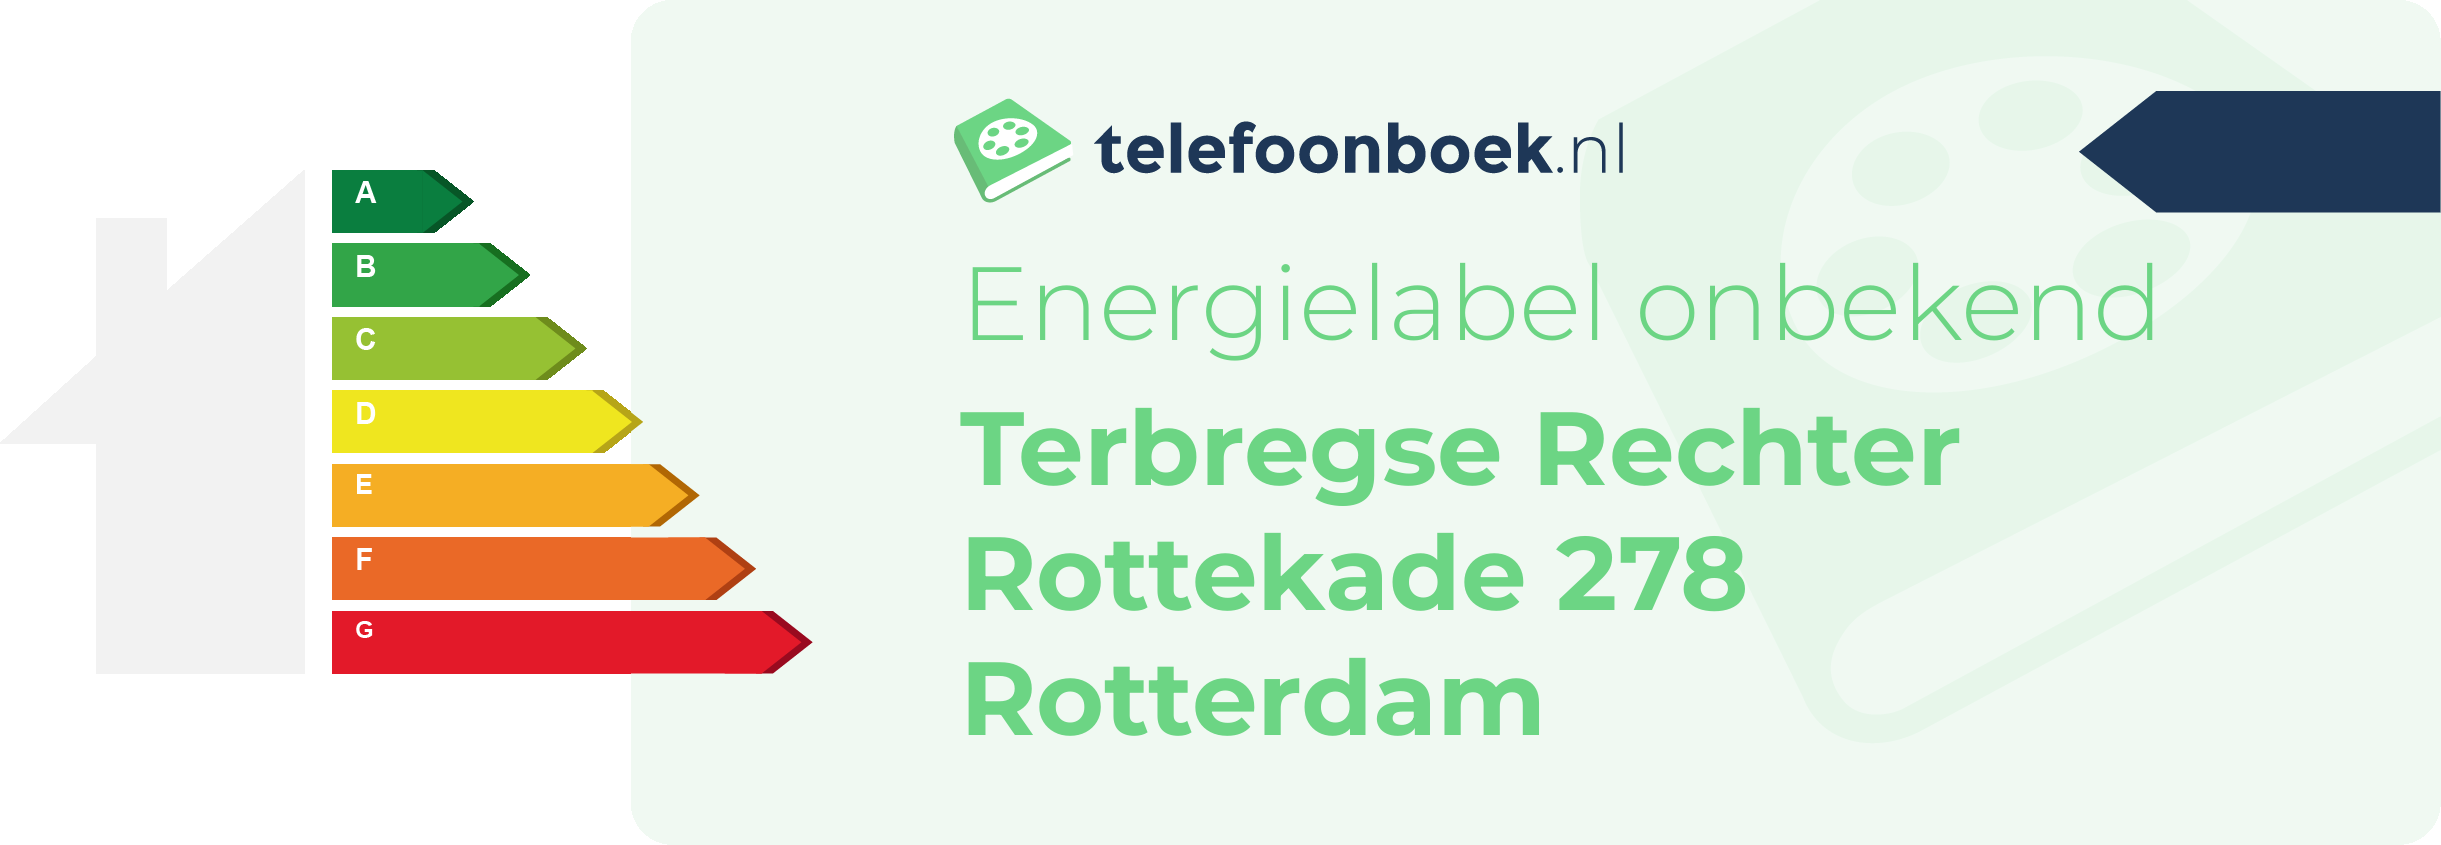 Energielabel Terbregse Rechter Rottekade 278 Rotterdam